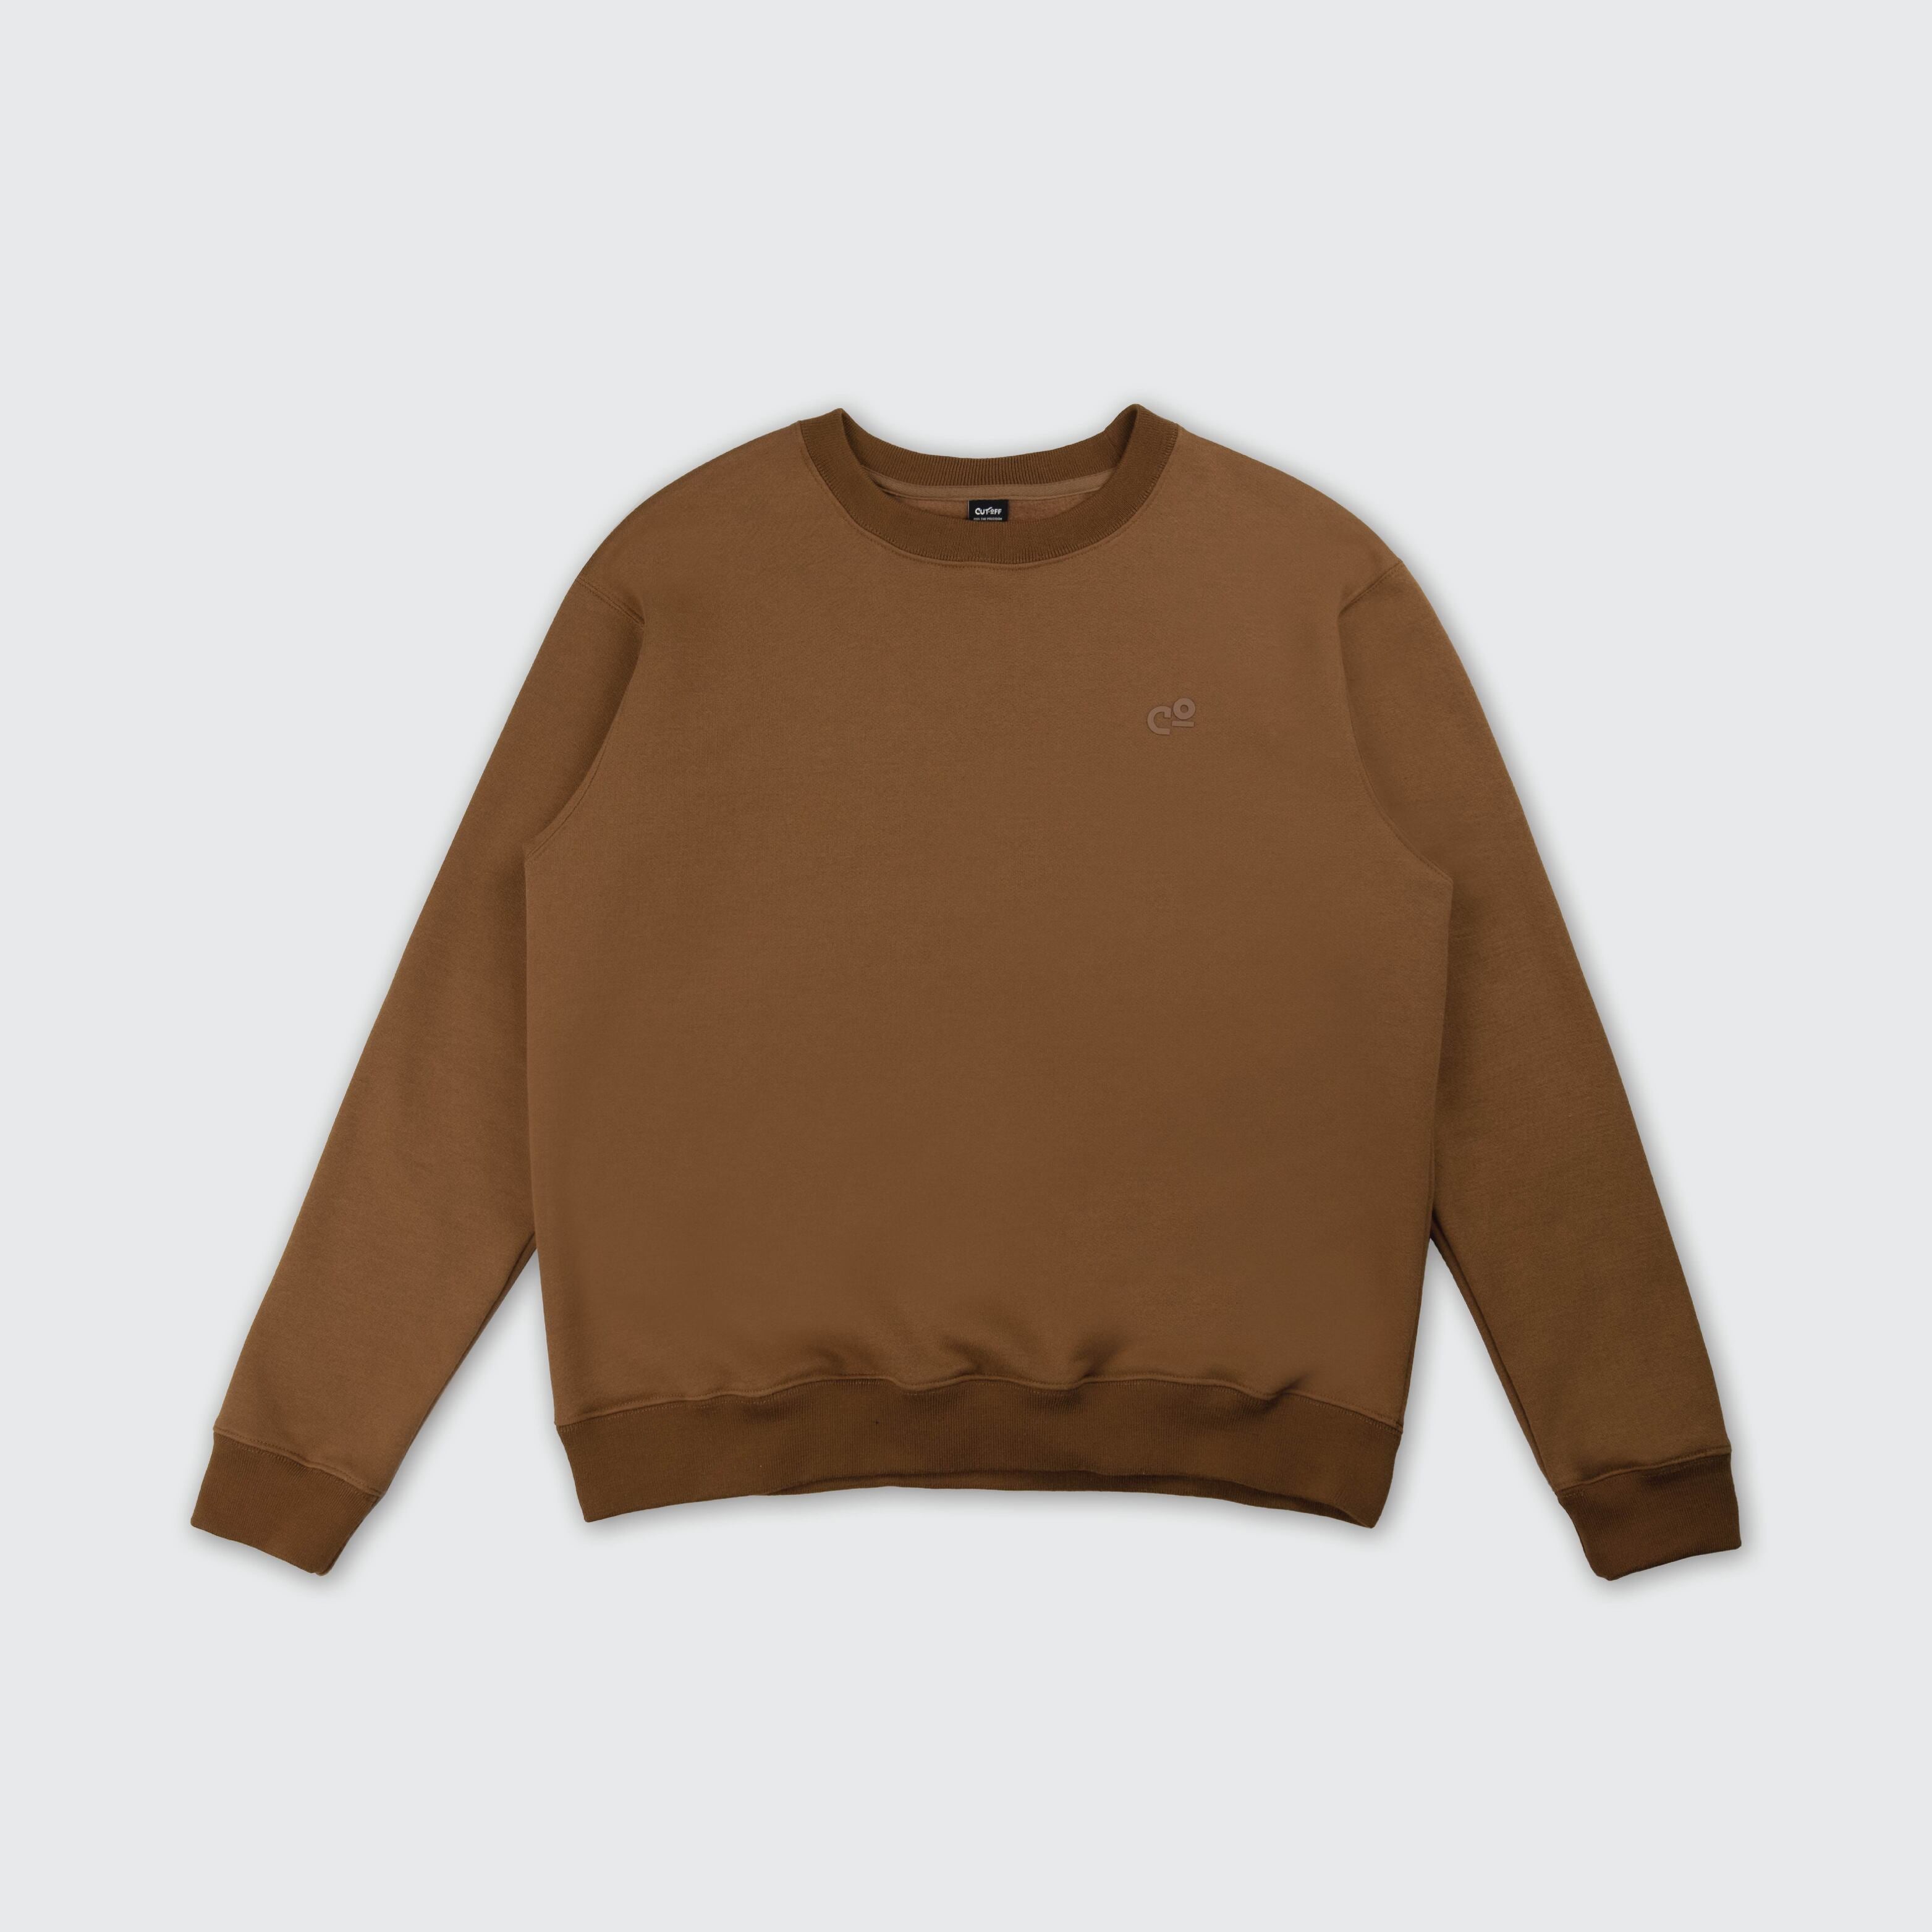 CUTOFF Brixton Crewneck Basic Sweatshirt Sweater Pria Polos Lengan Panjang